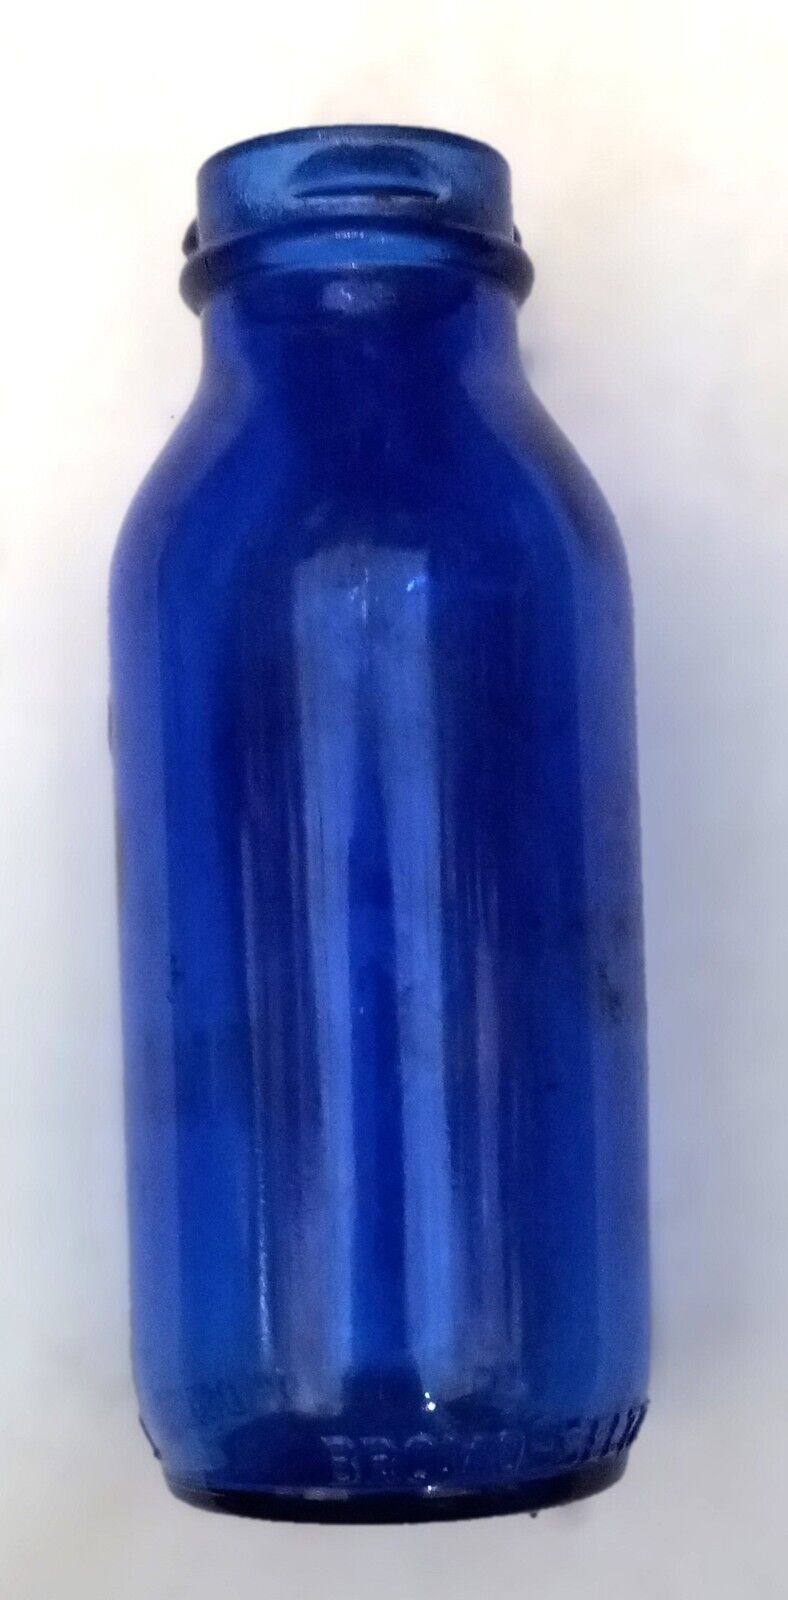 Small Cobalt Bromo Seltzer bottle by Emerson Drug Co.